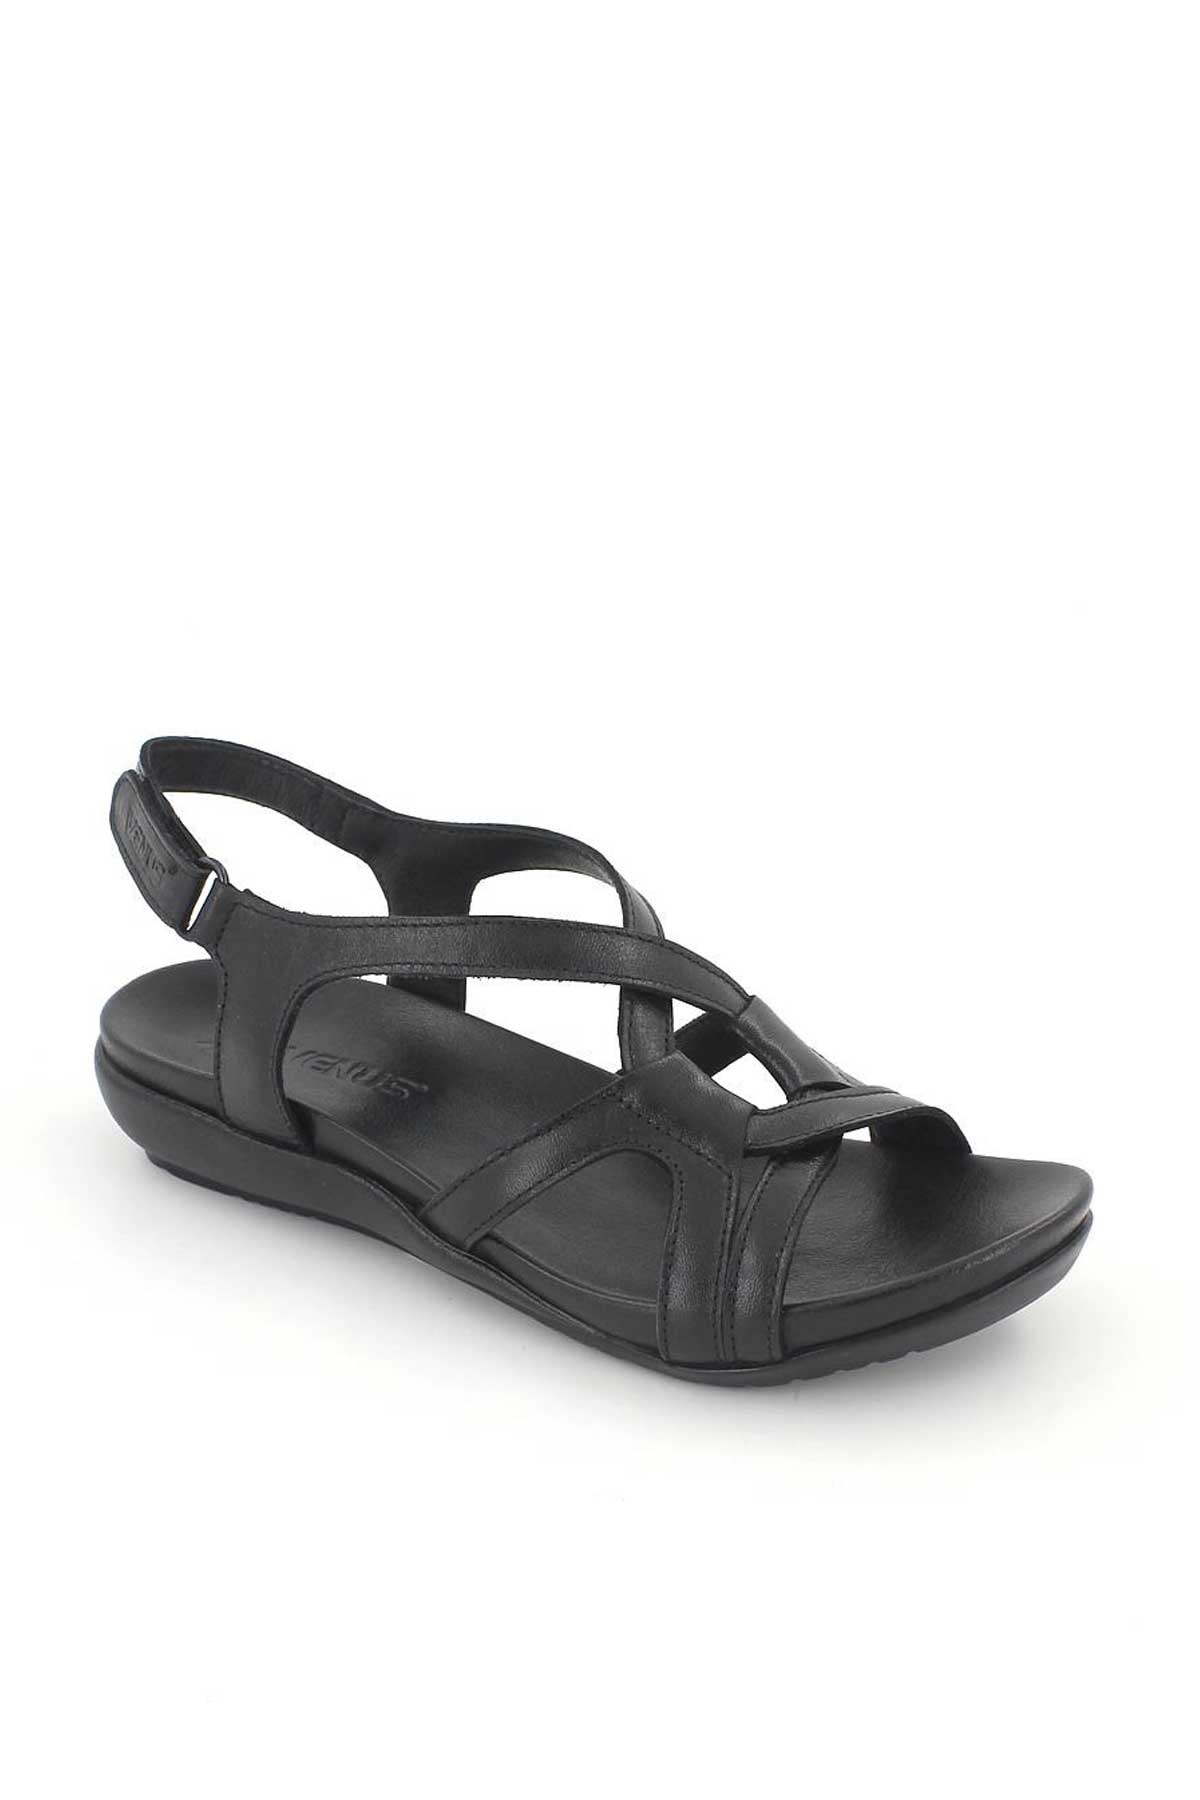 Kadın Comfort Sandalet Siyah 206Y - Thumbnail